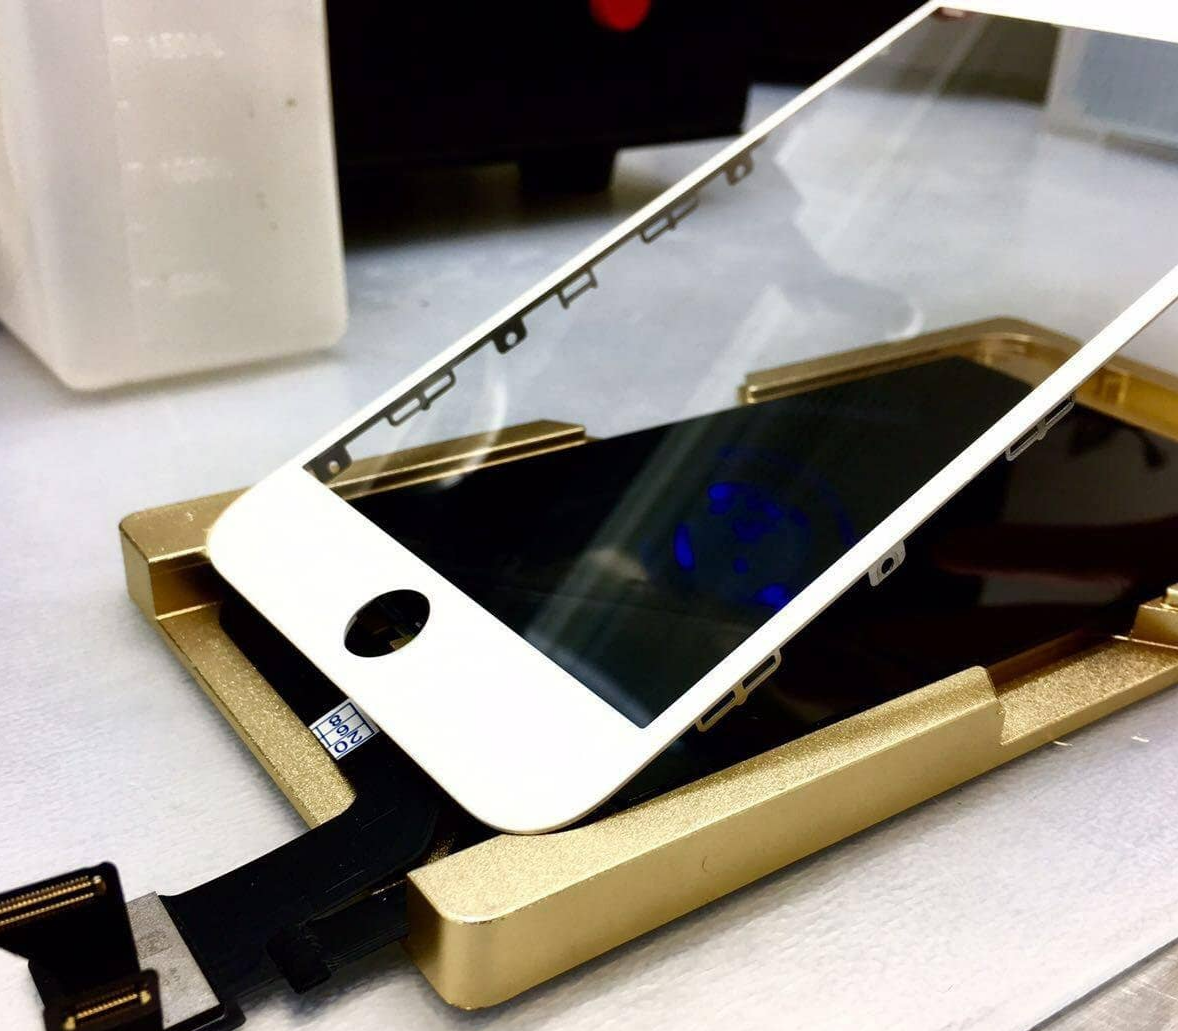 Как заменяют стекло на iphone, а дисплей оставляют целым